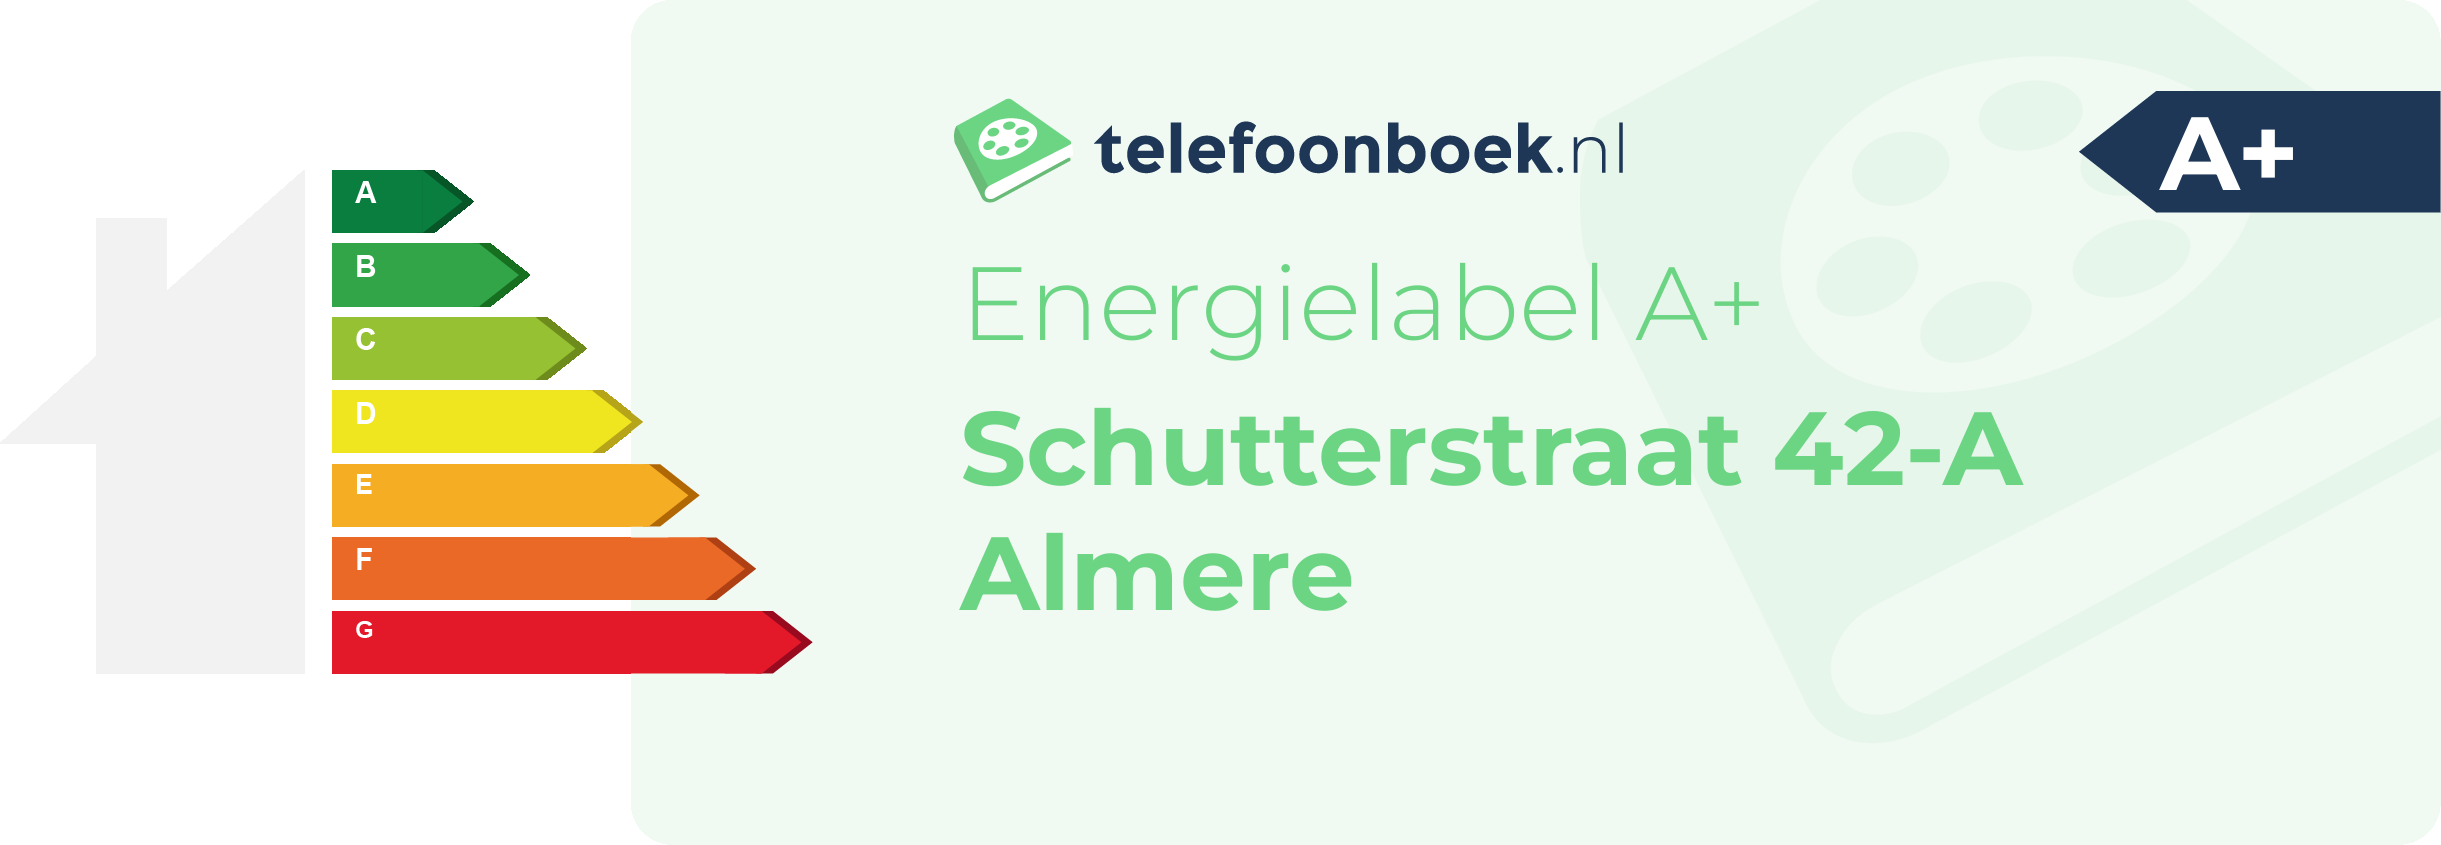 Energielabel Schutterstraat 42-A Almere